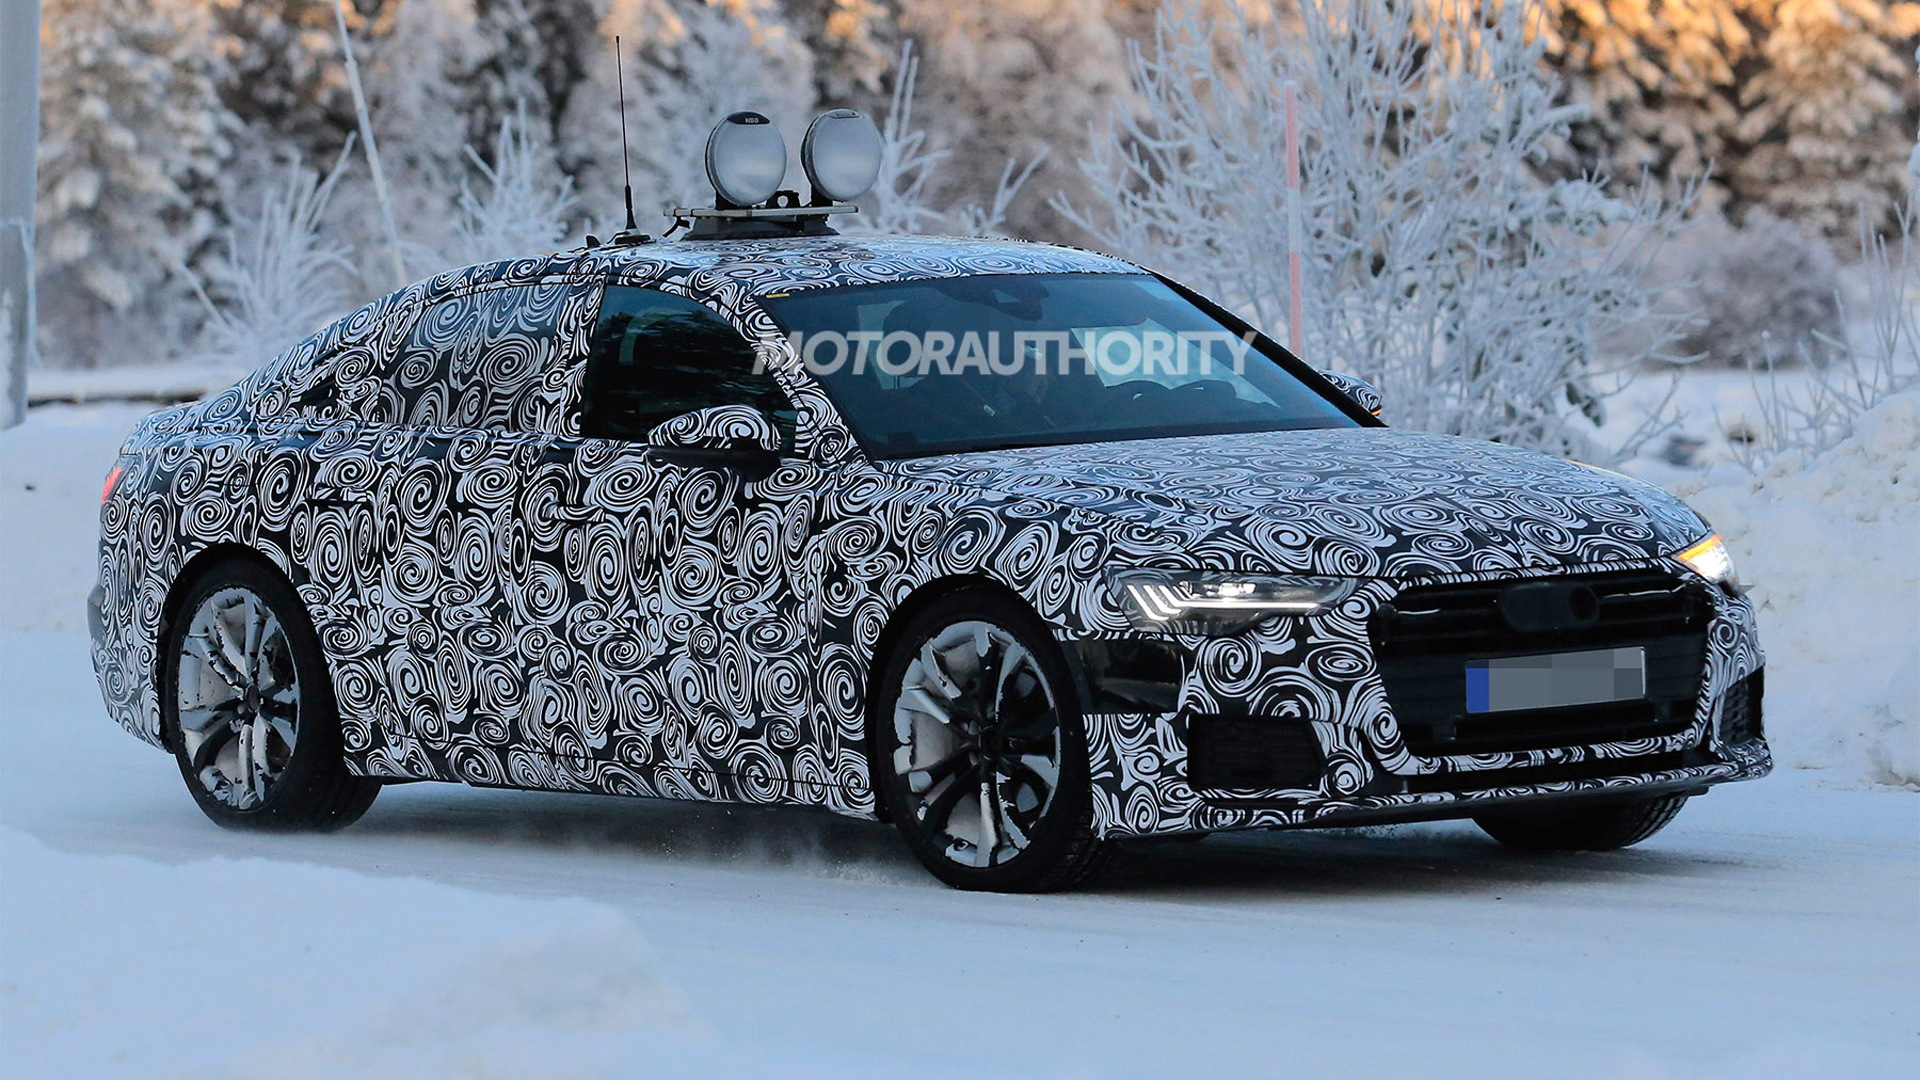 2019 Audi A6 spy shots - Image via S. Baldauf/SB-Medien